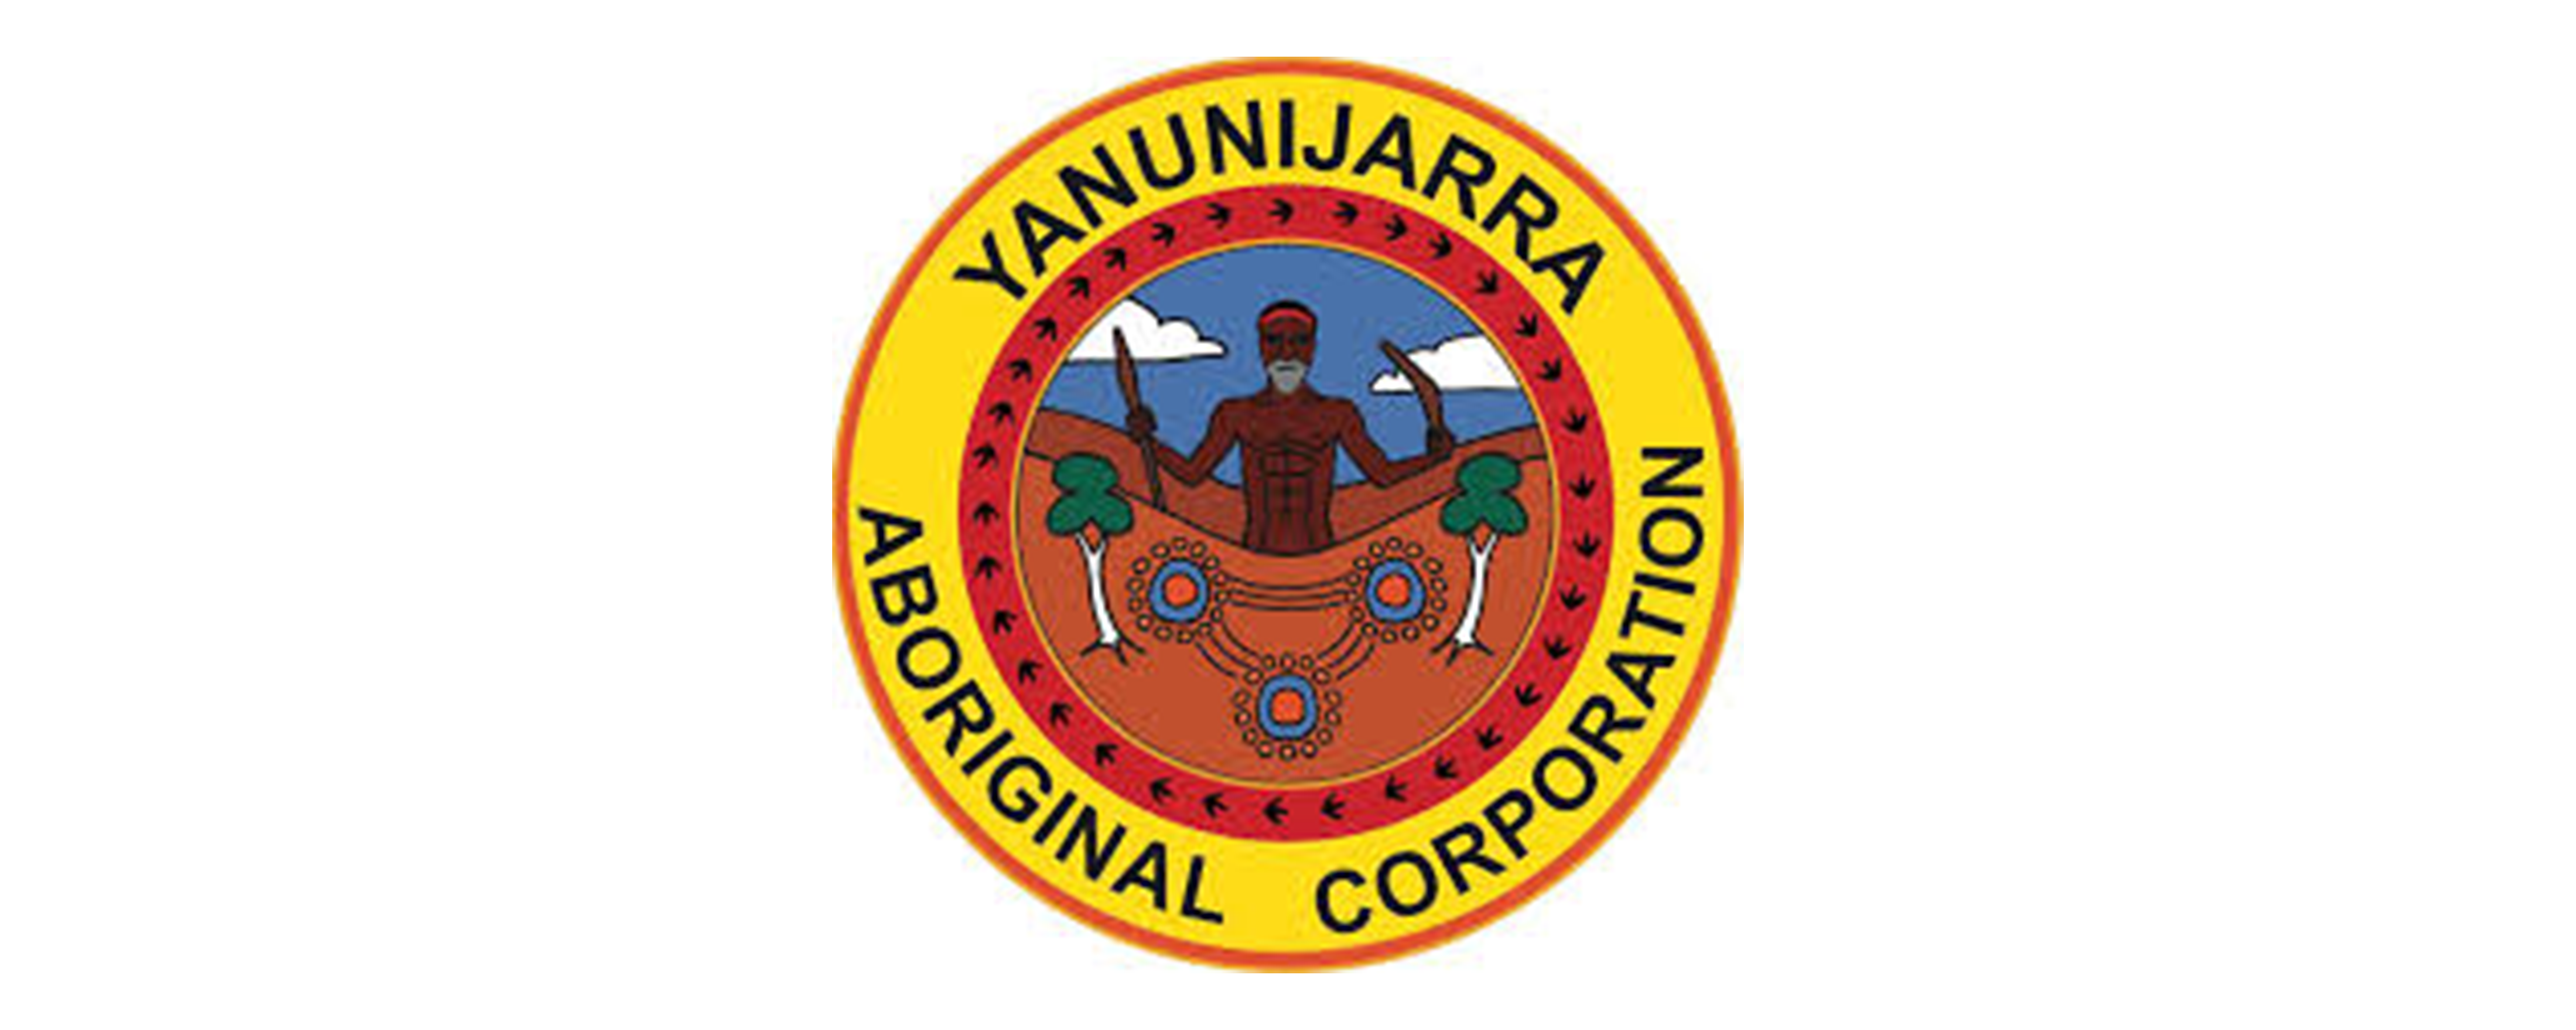 Yanunijarra Aboriginal Corporation